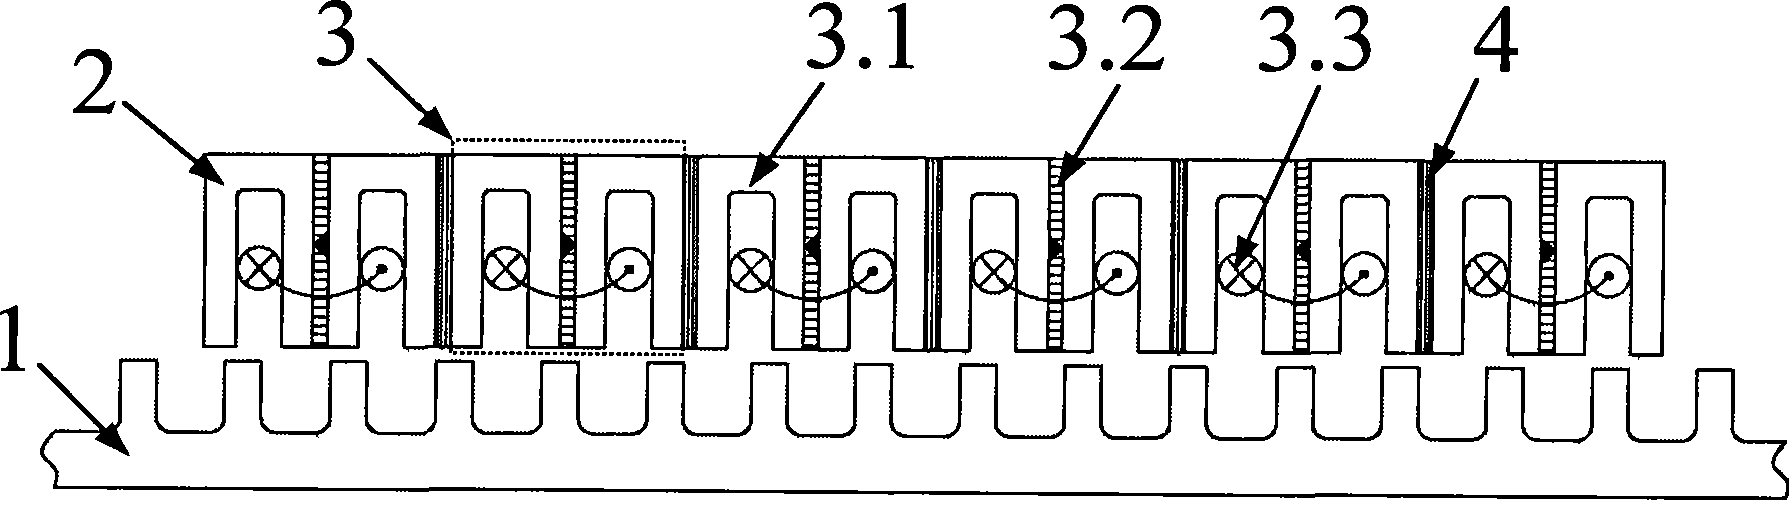 Modularization error-tolerance type permanent magnet switch magnetic linkage straight line motor